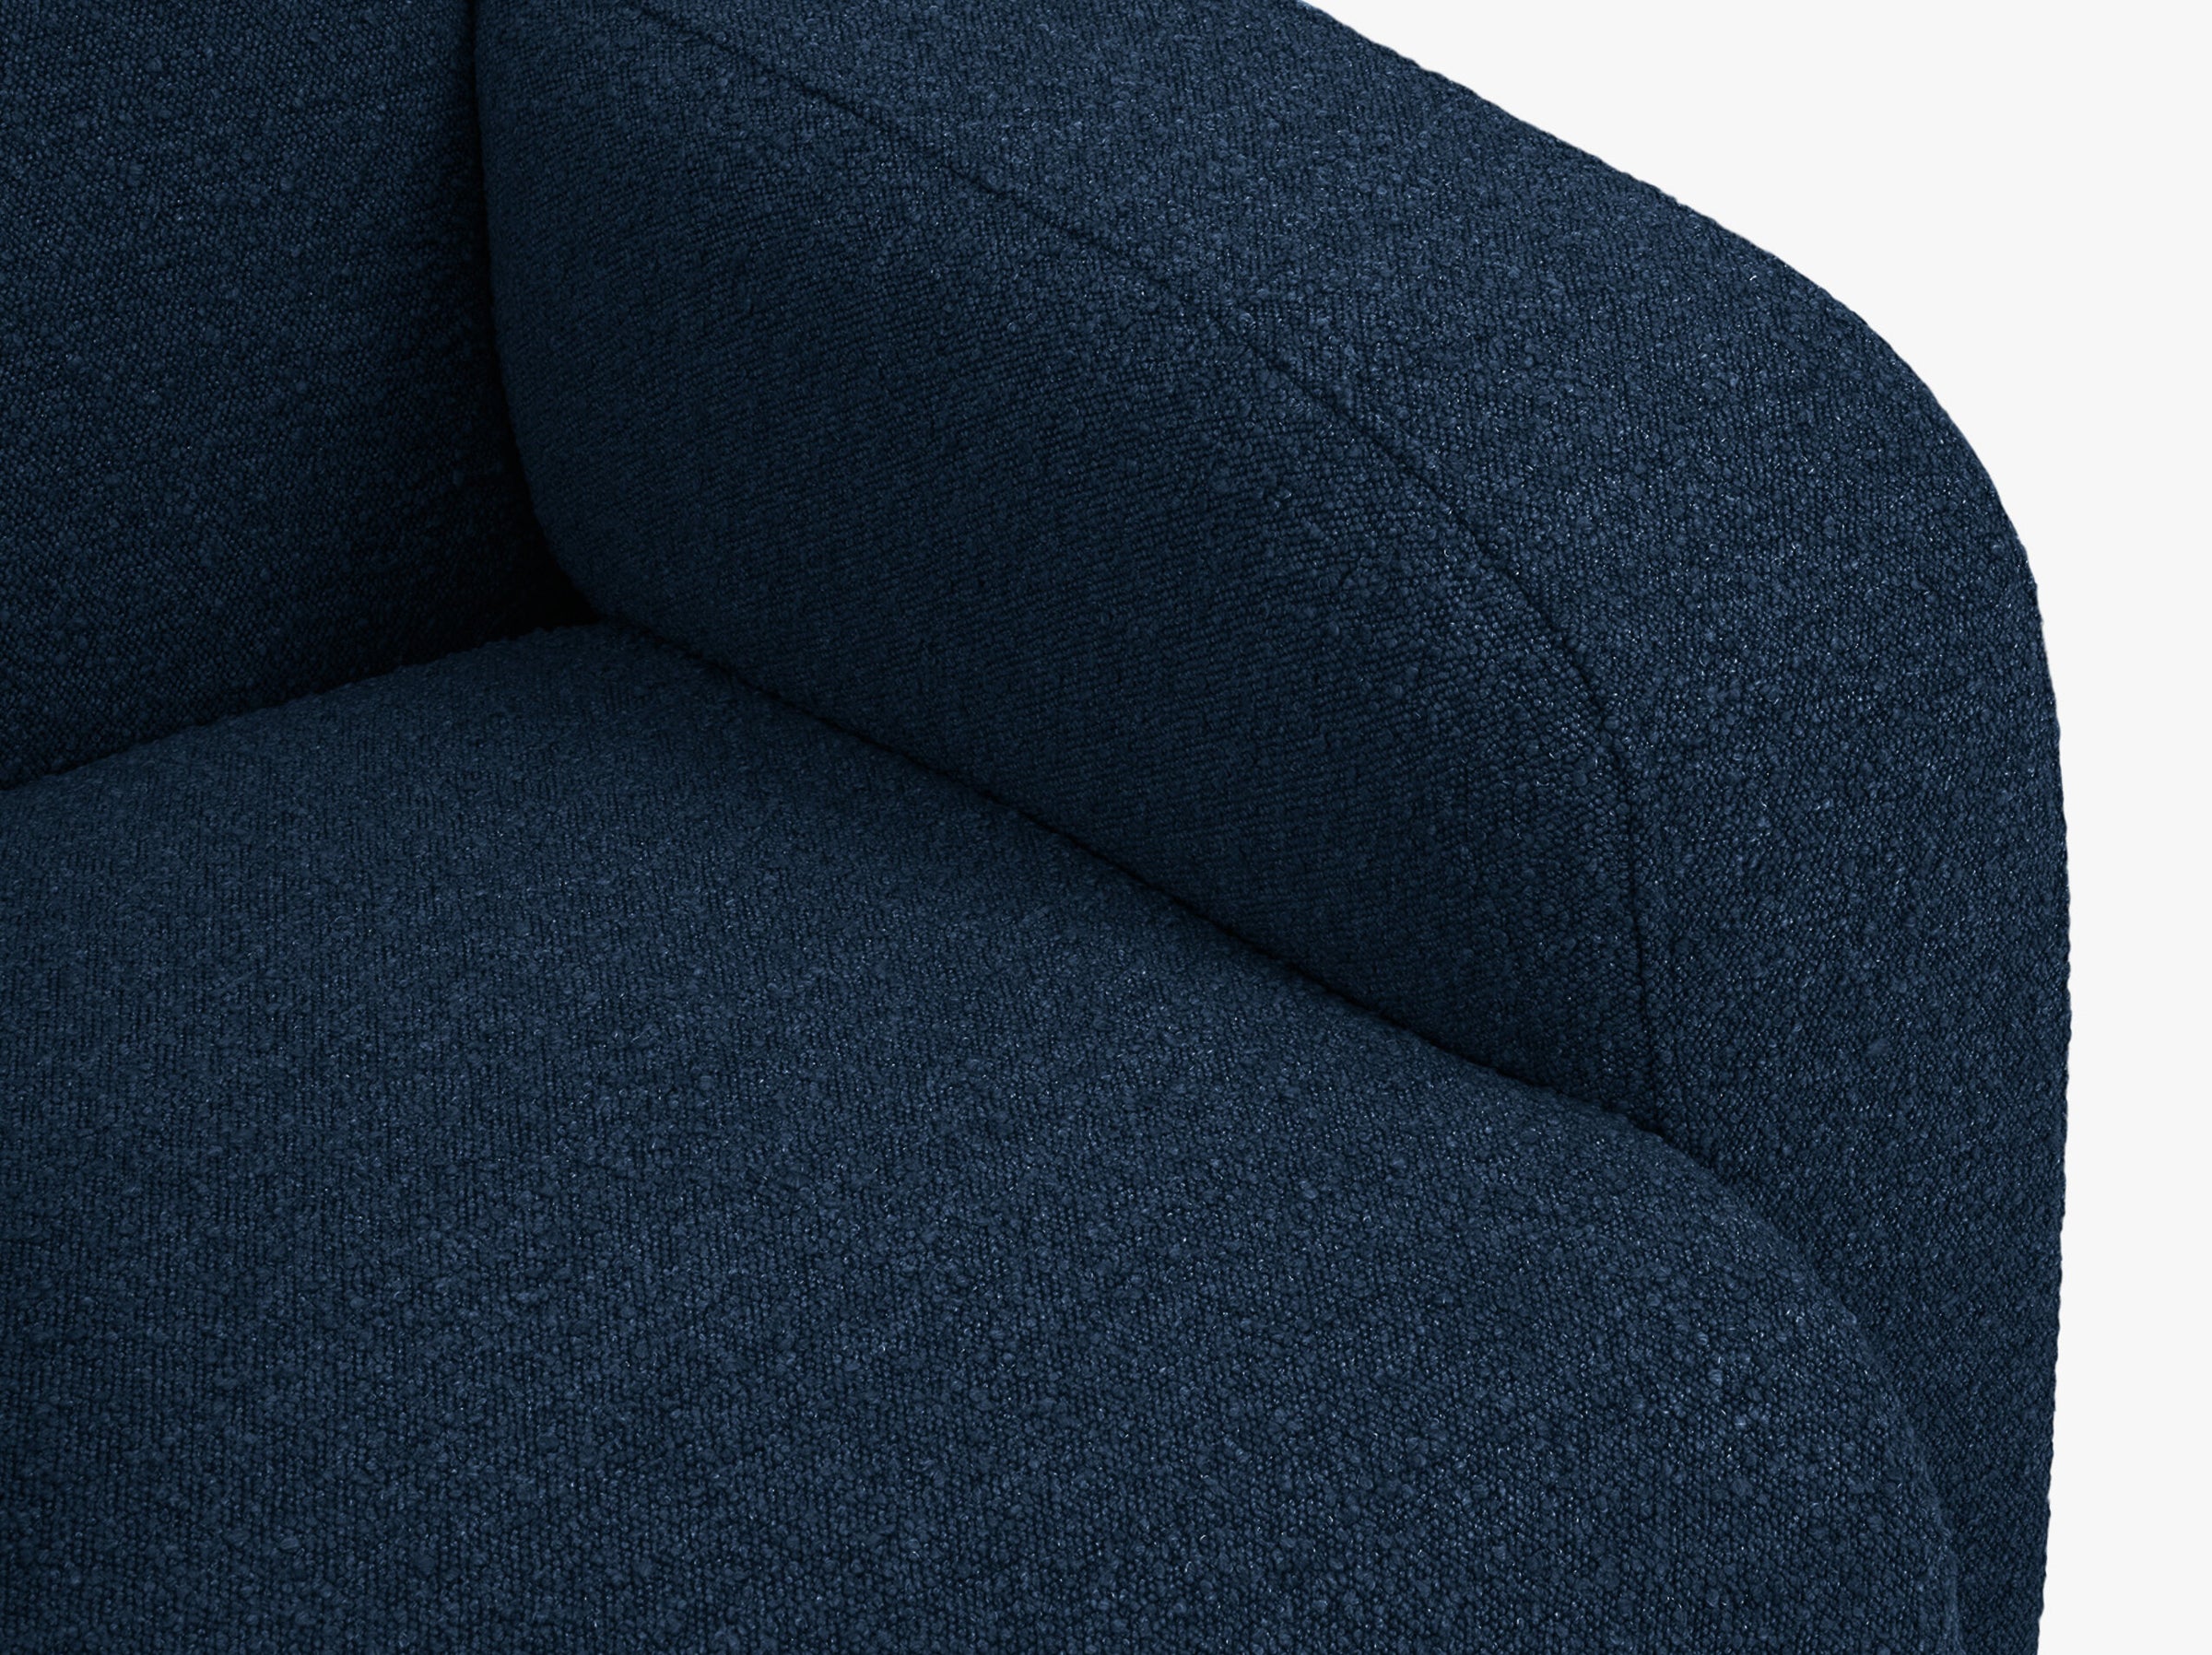 Molino sofas boucle dunkelblau